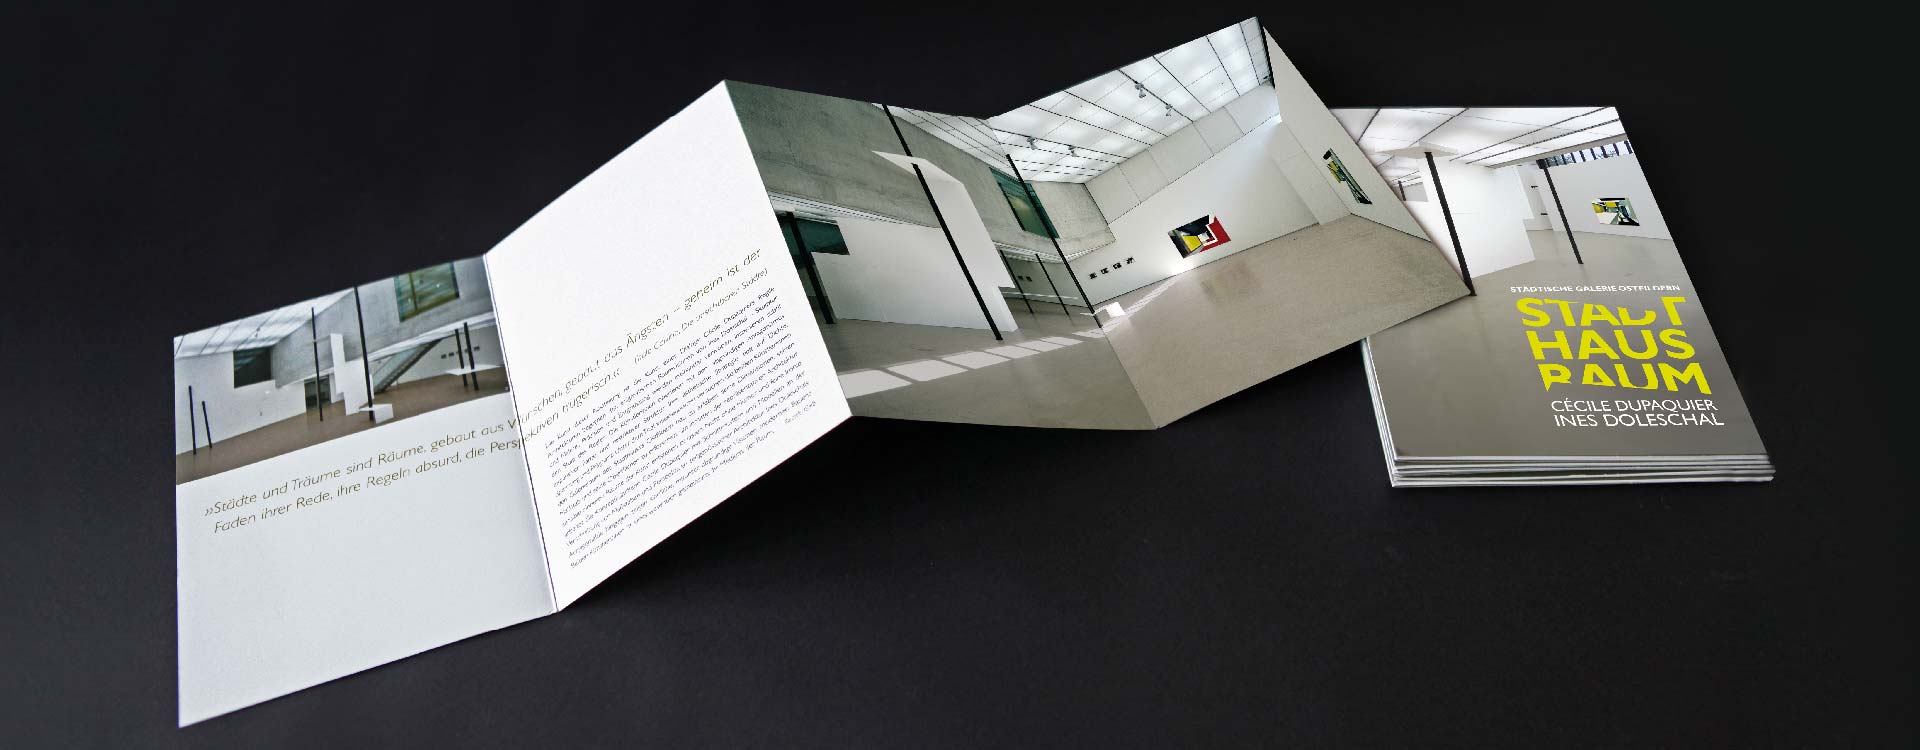 Leaflet for the exhibition StadtHausRaum with Ines Doleschal and Cécile Dupaquier in the Ostfildern Town Gallery; Design: Kattrin Richter | Graphic Design Studio